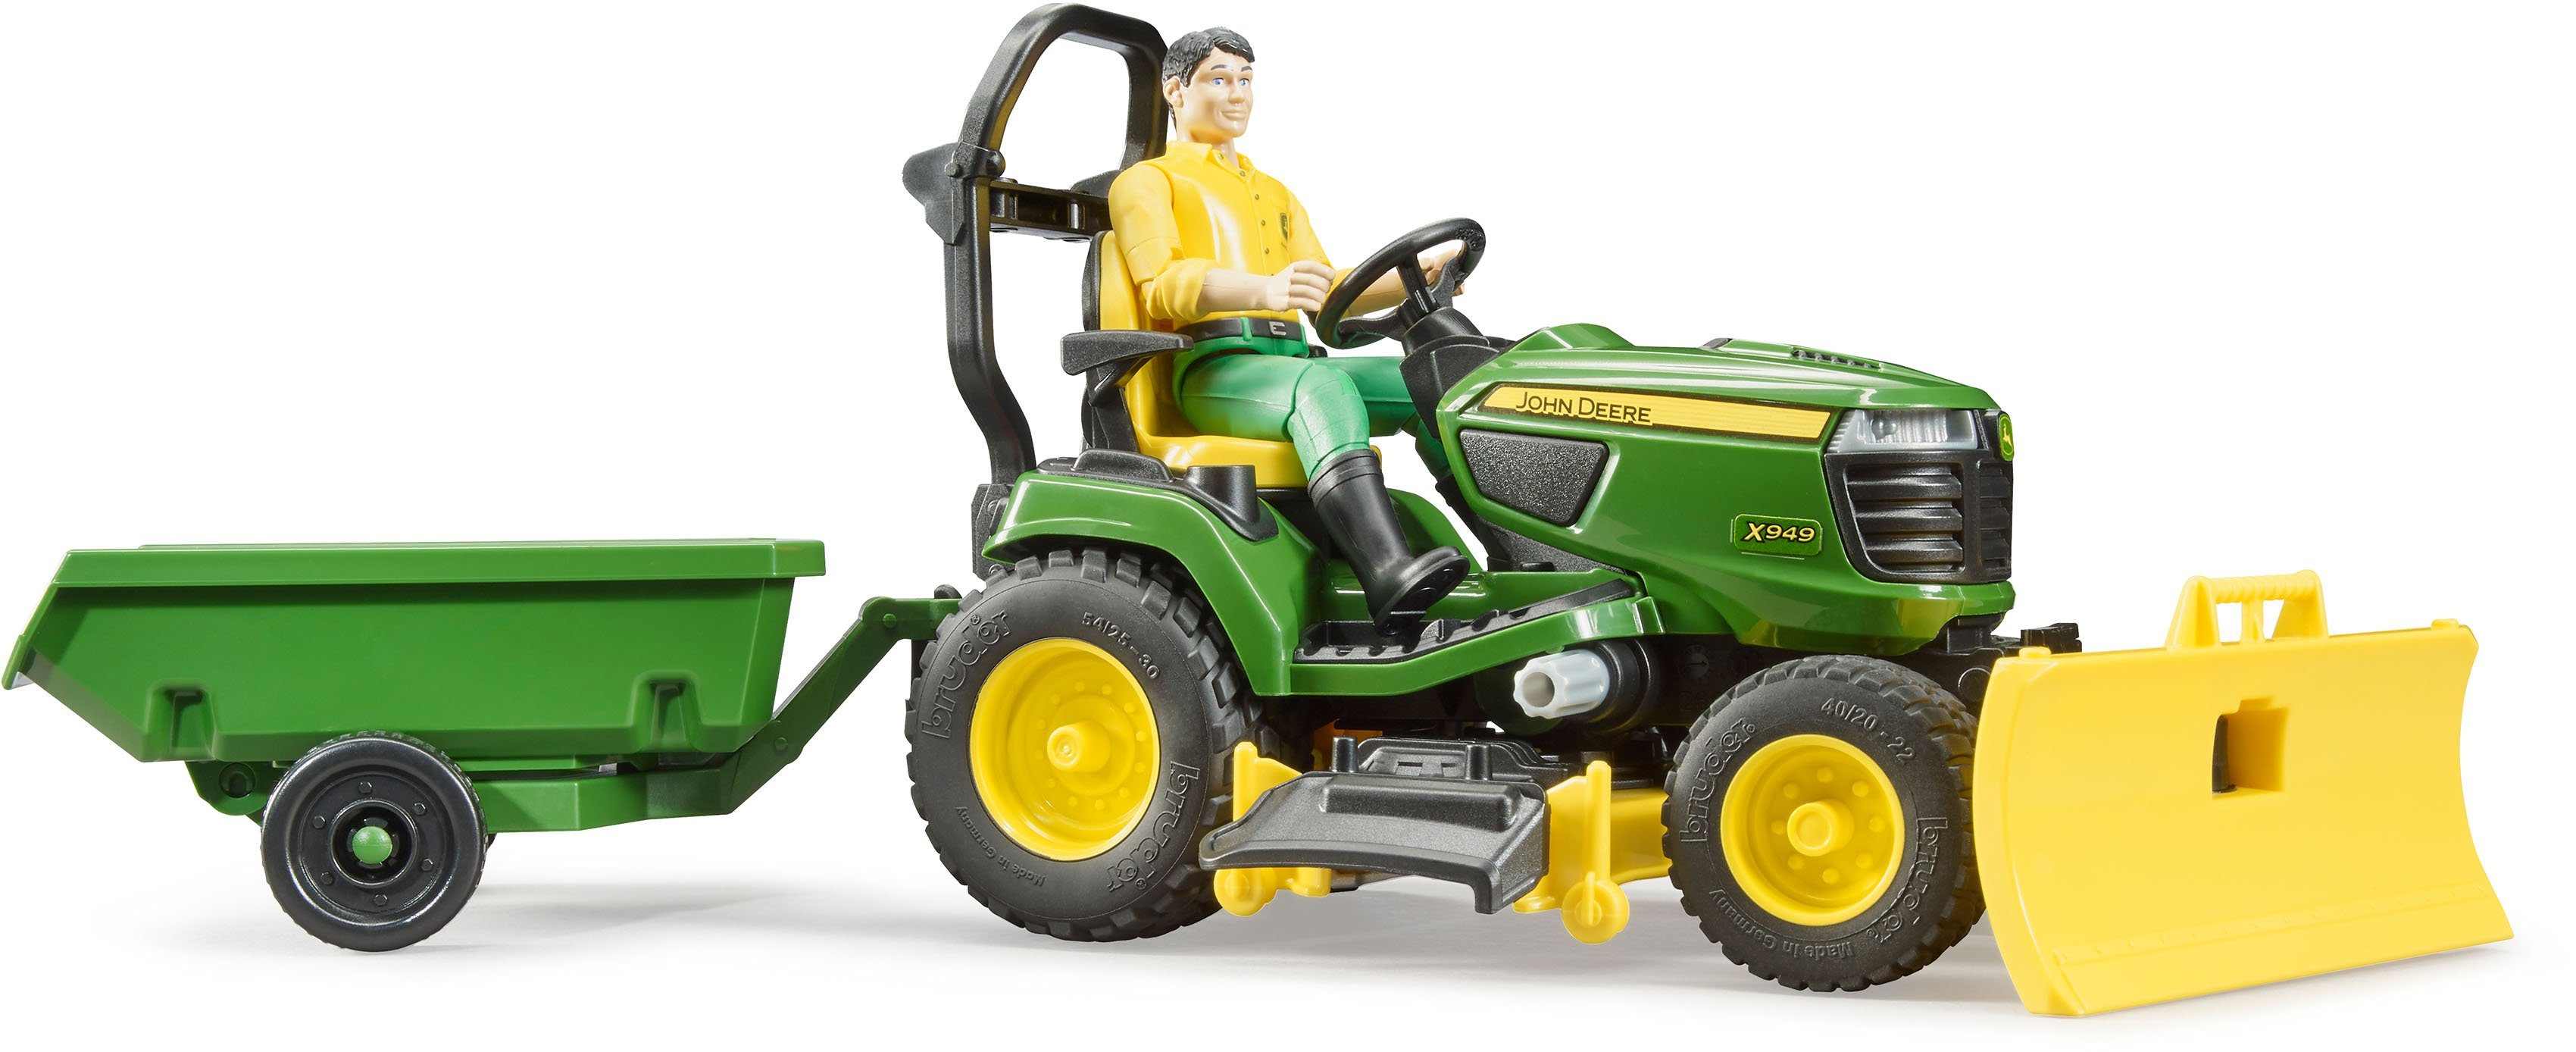 Bruder® Spielzeug-Traktor bworld John Deere Aufsitzrasenmäher mit Anhänger und Gärtner (62104), Made in Germany